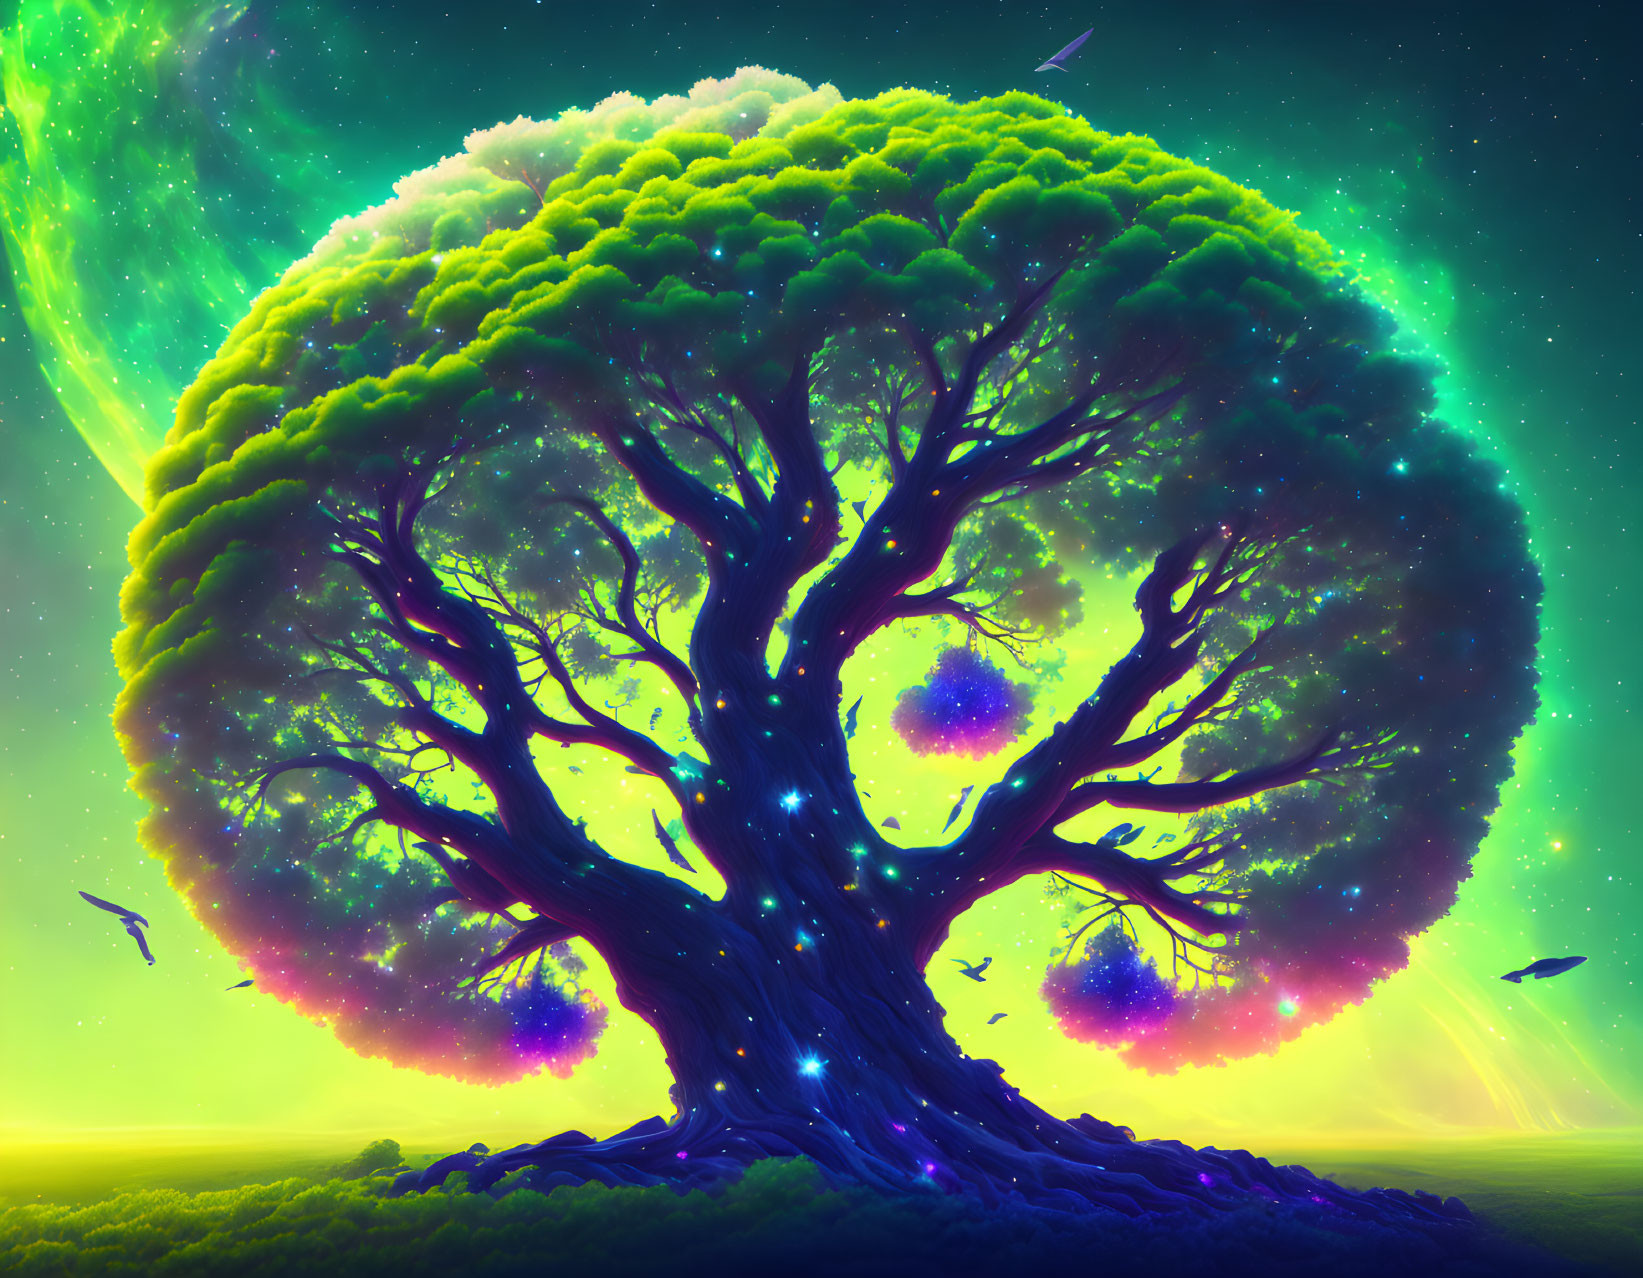 Colorful digital artwork of mystical tree under starry sky